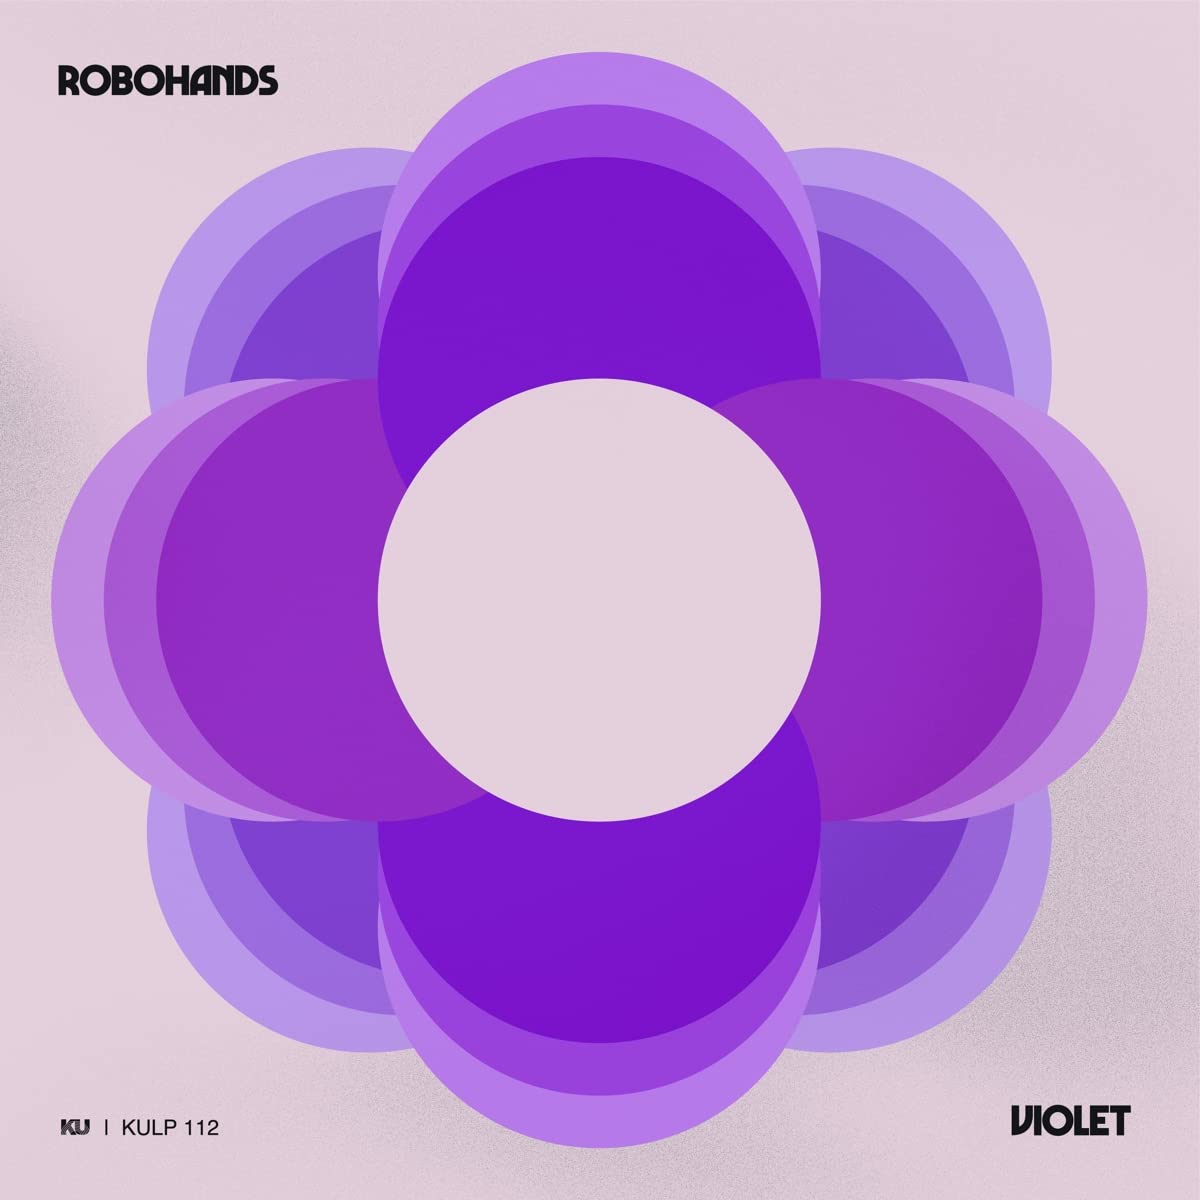 ROBOHANDS - Violet cover 